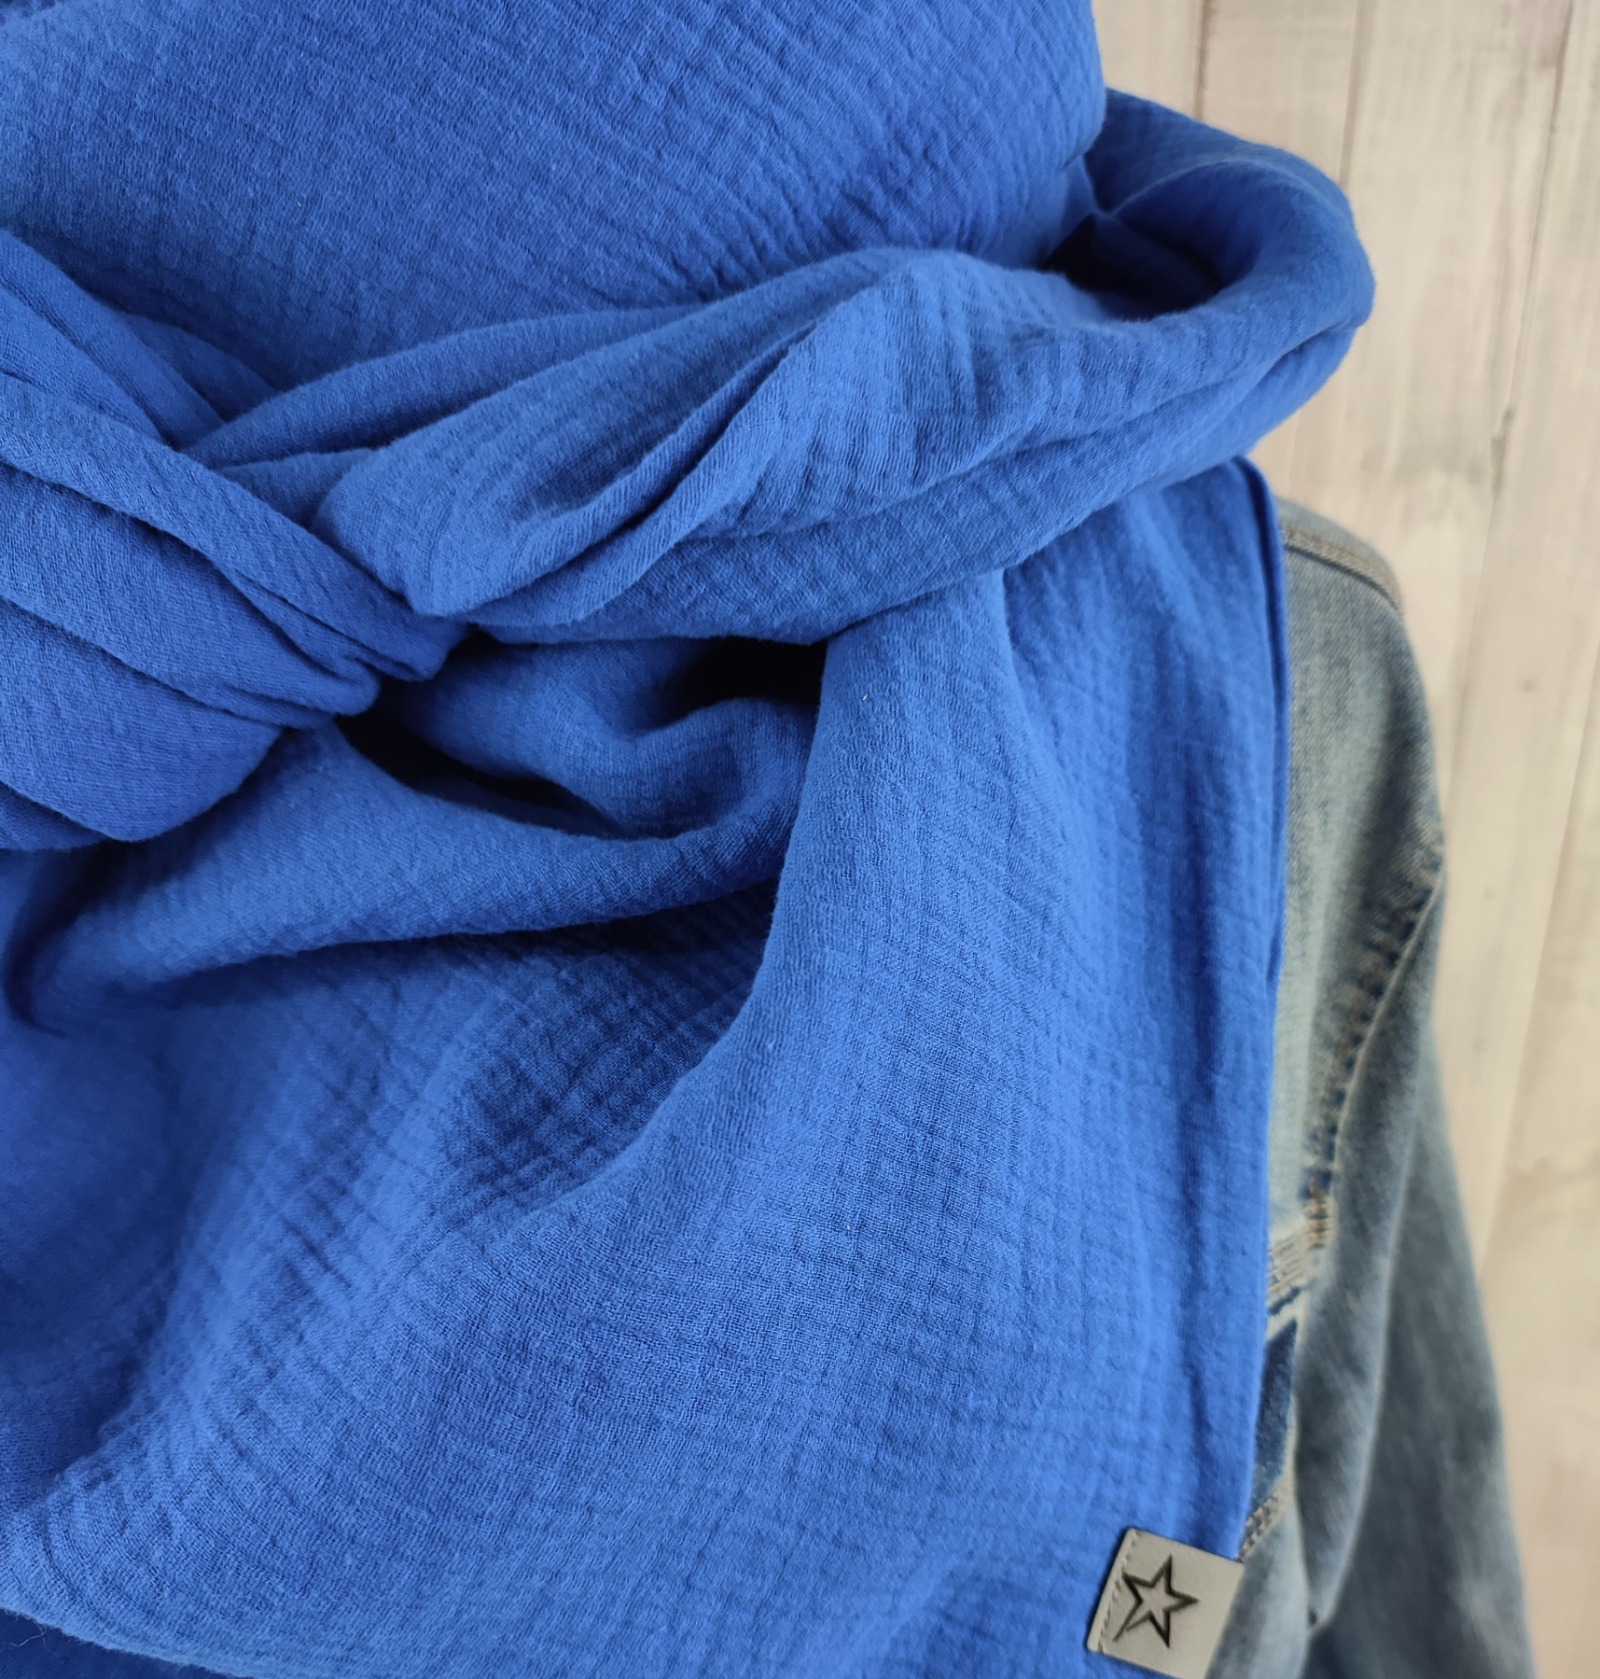 Tuch Dreieckstuch Musselin Damen Schal blau royalblau XXL Tuch aus Baumwolle Mamatuch 2